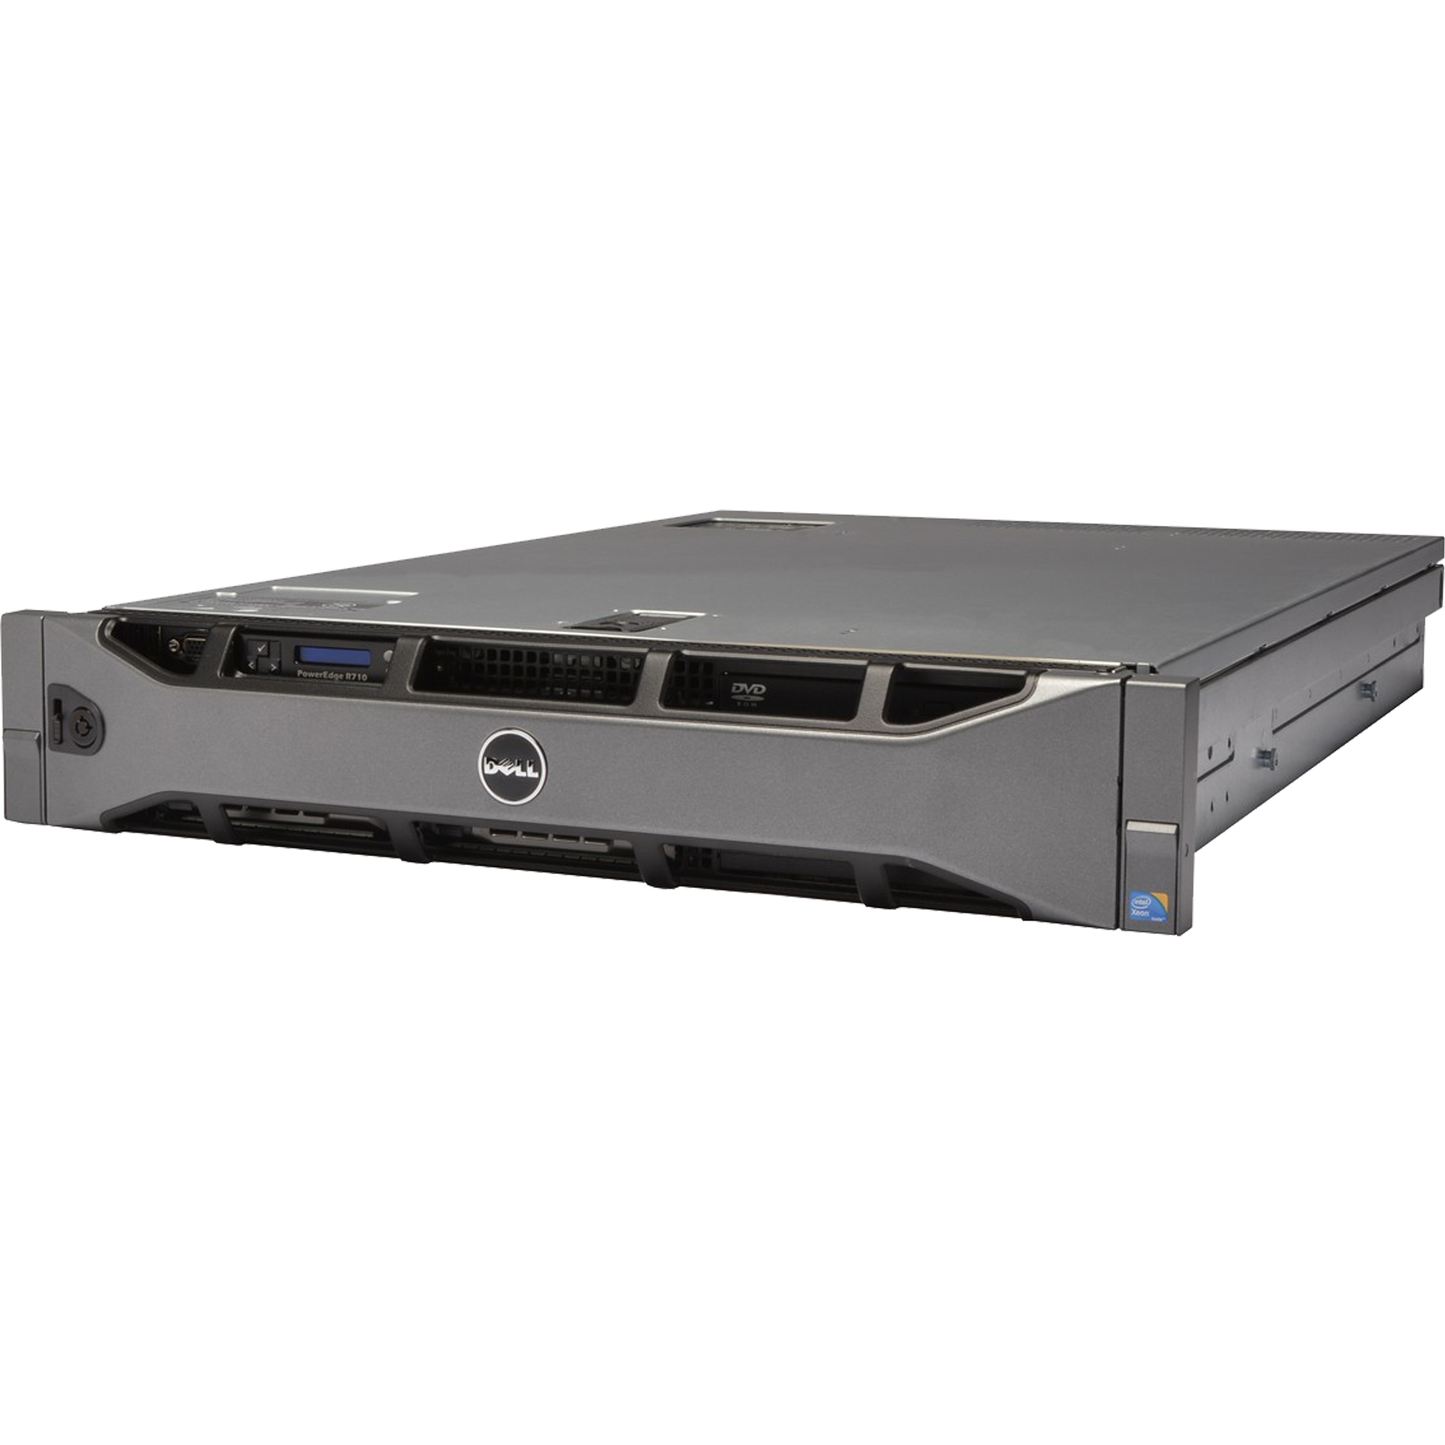 Dell PowerEdge R710 2 x 4 Core Intel Xeon CPU Server - 3.5" Backplane Servers